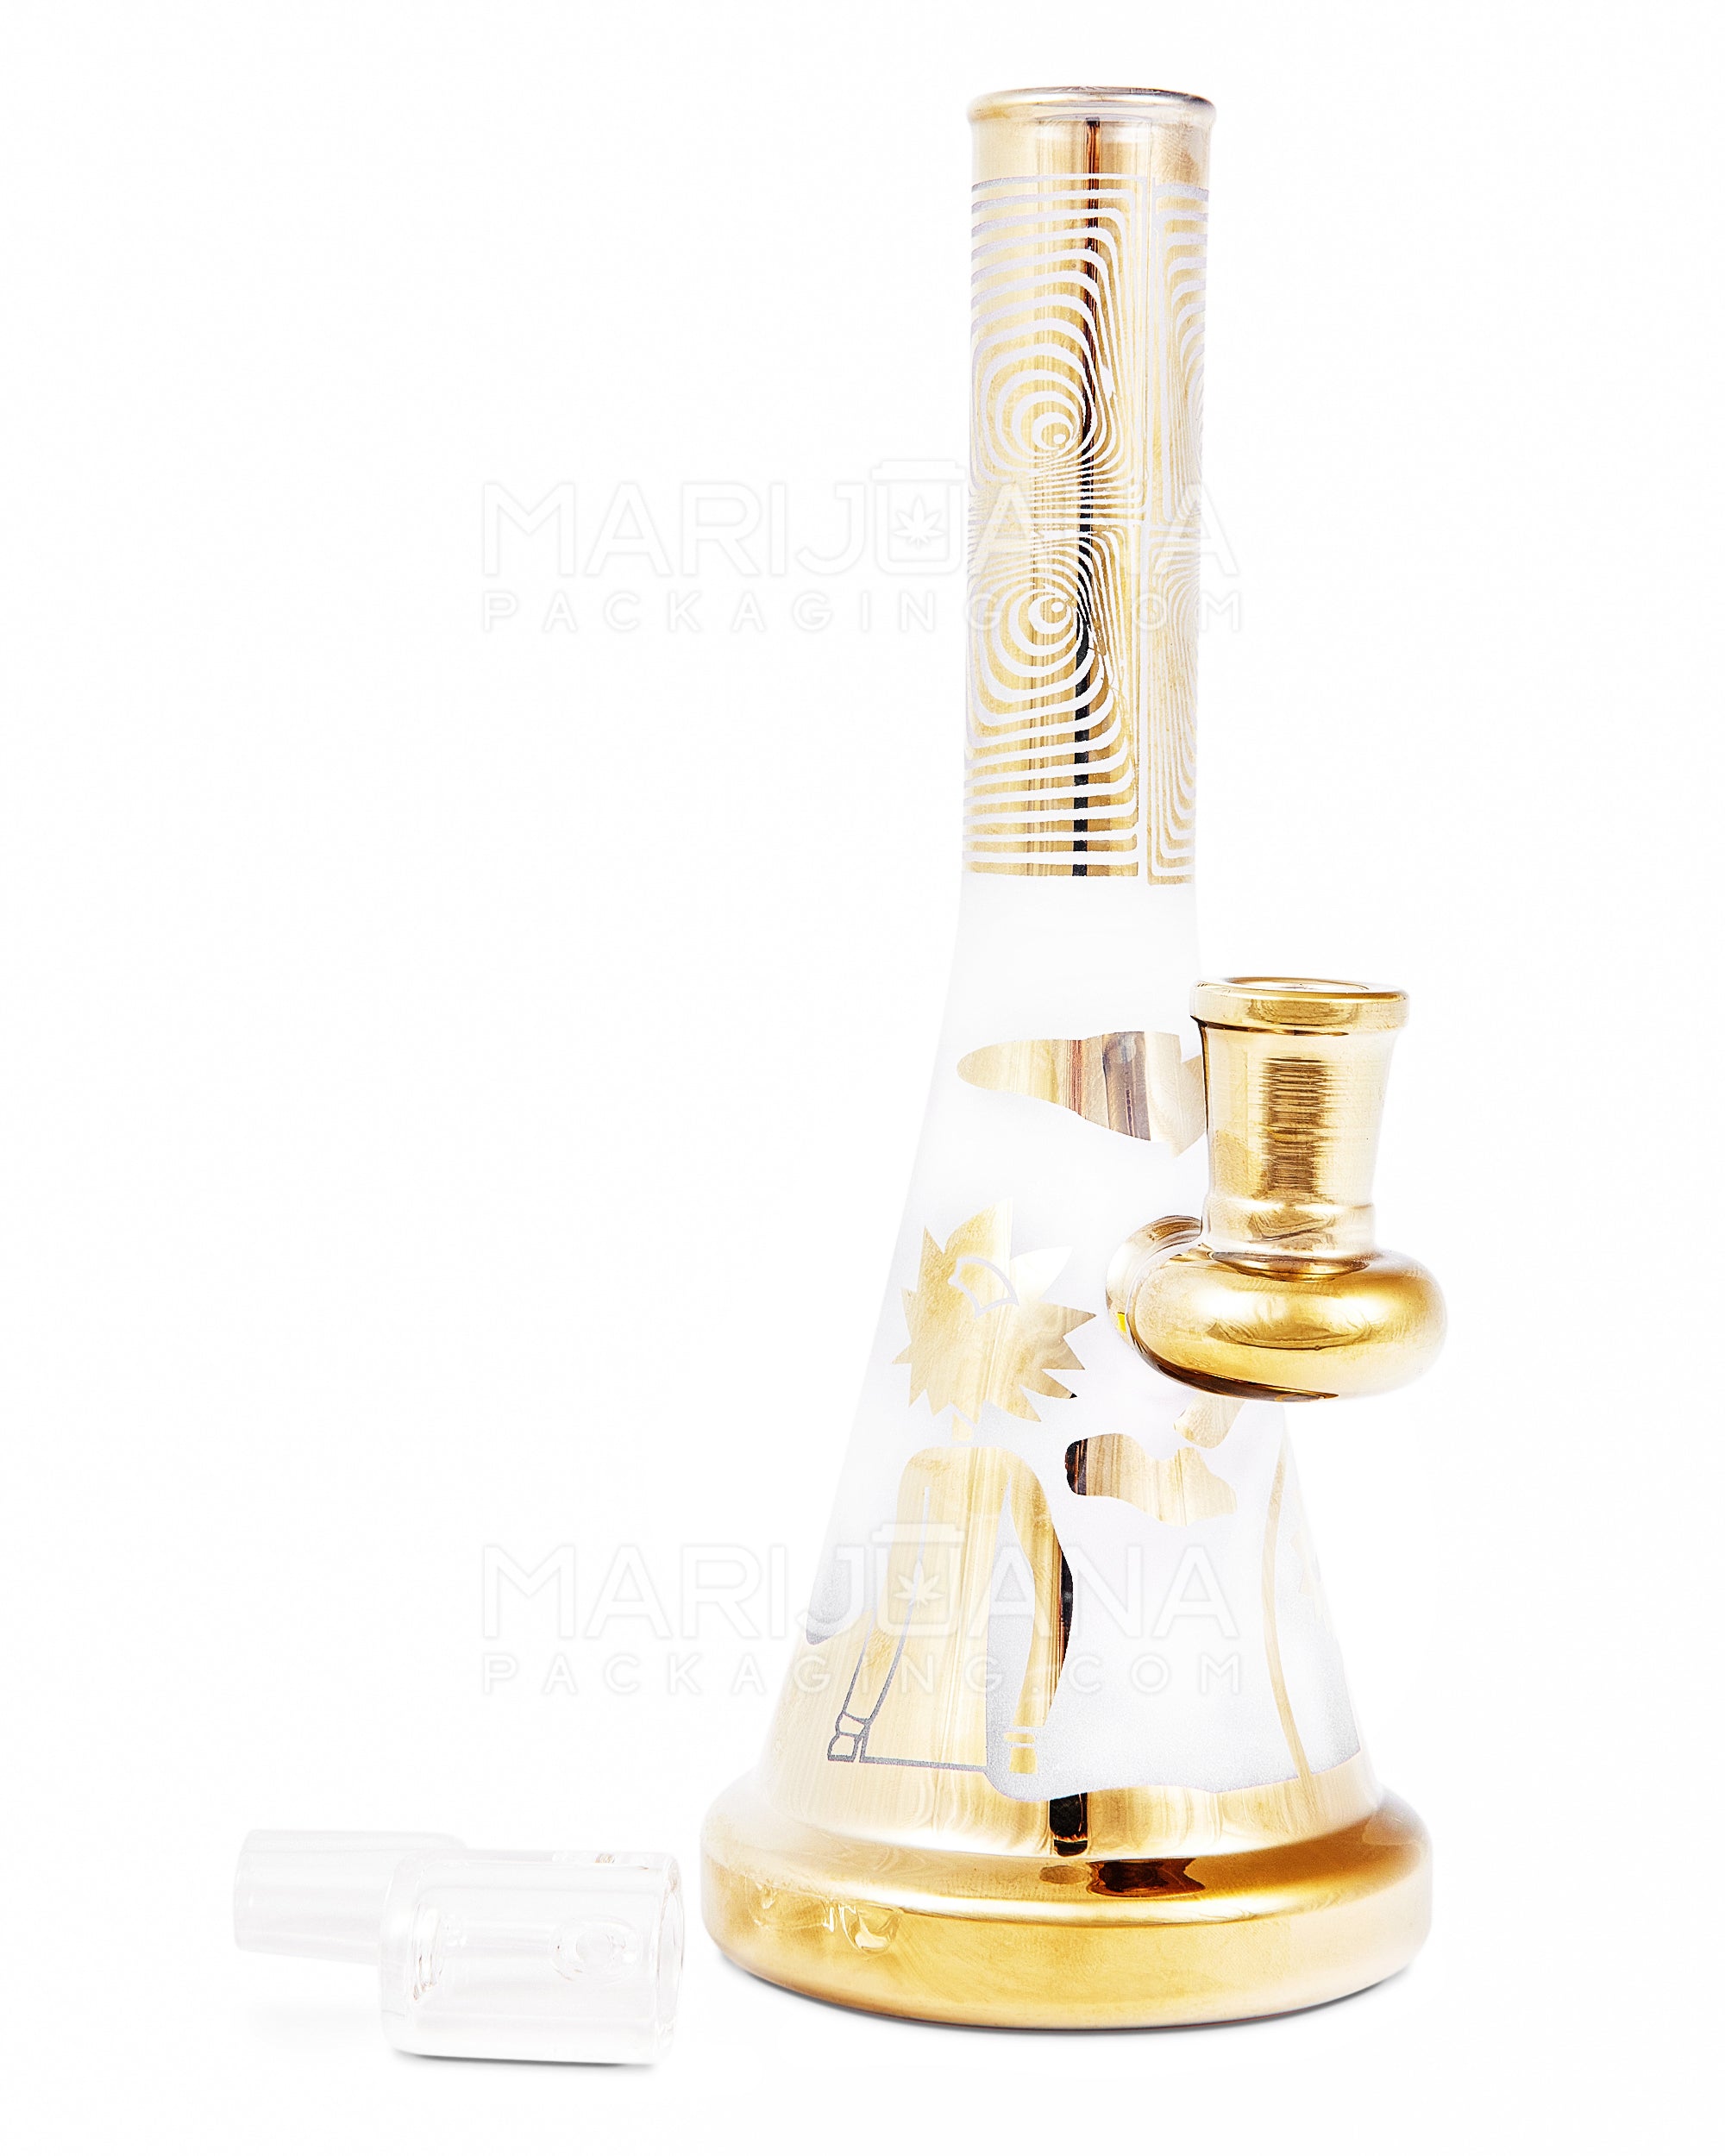 R&M Straight Neck Sandblasted Glass Beaker Dab Rig | 7.5in Tall - 14mm Banger - Gold - 2